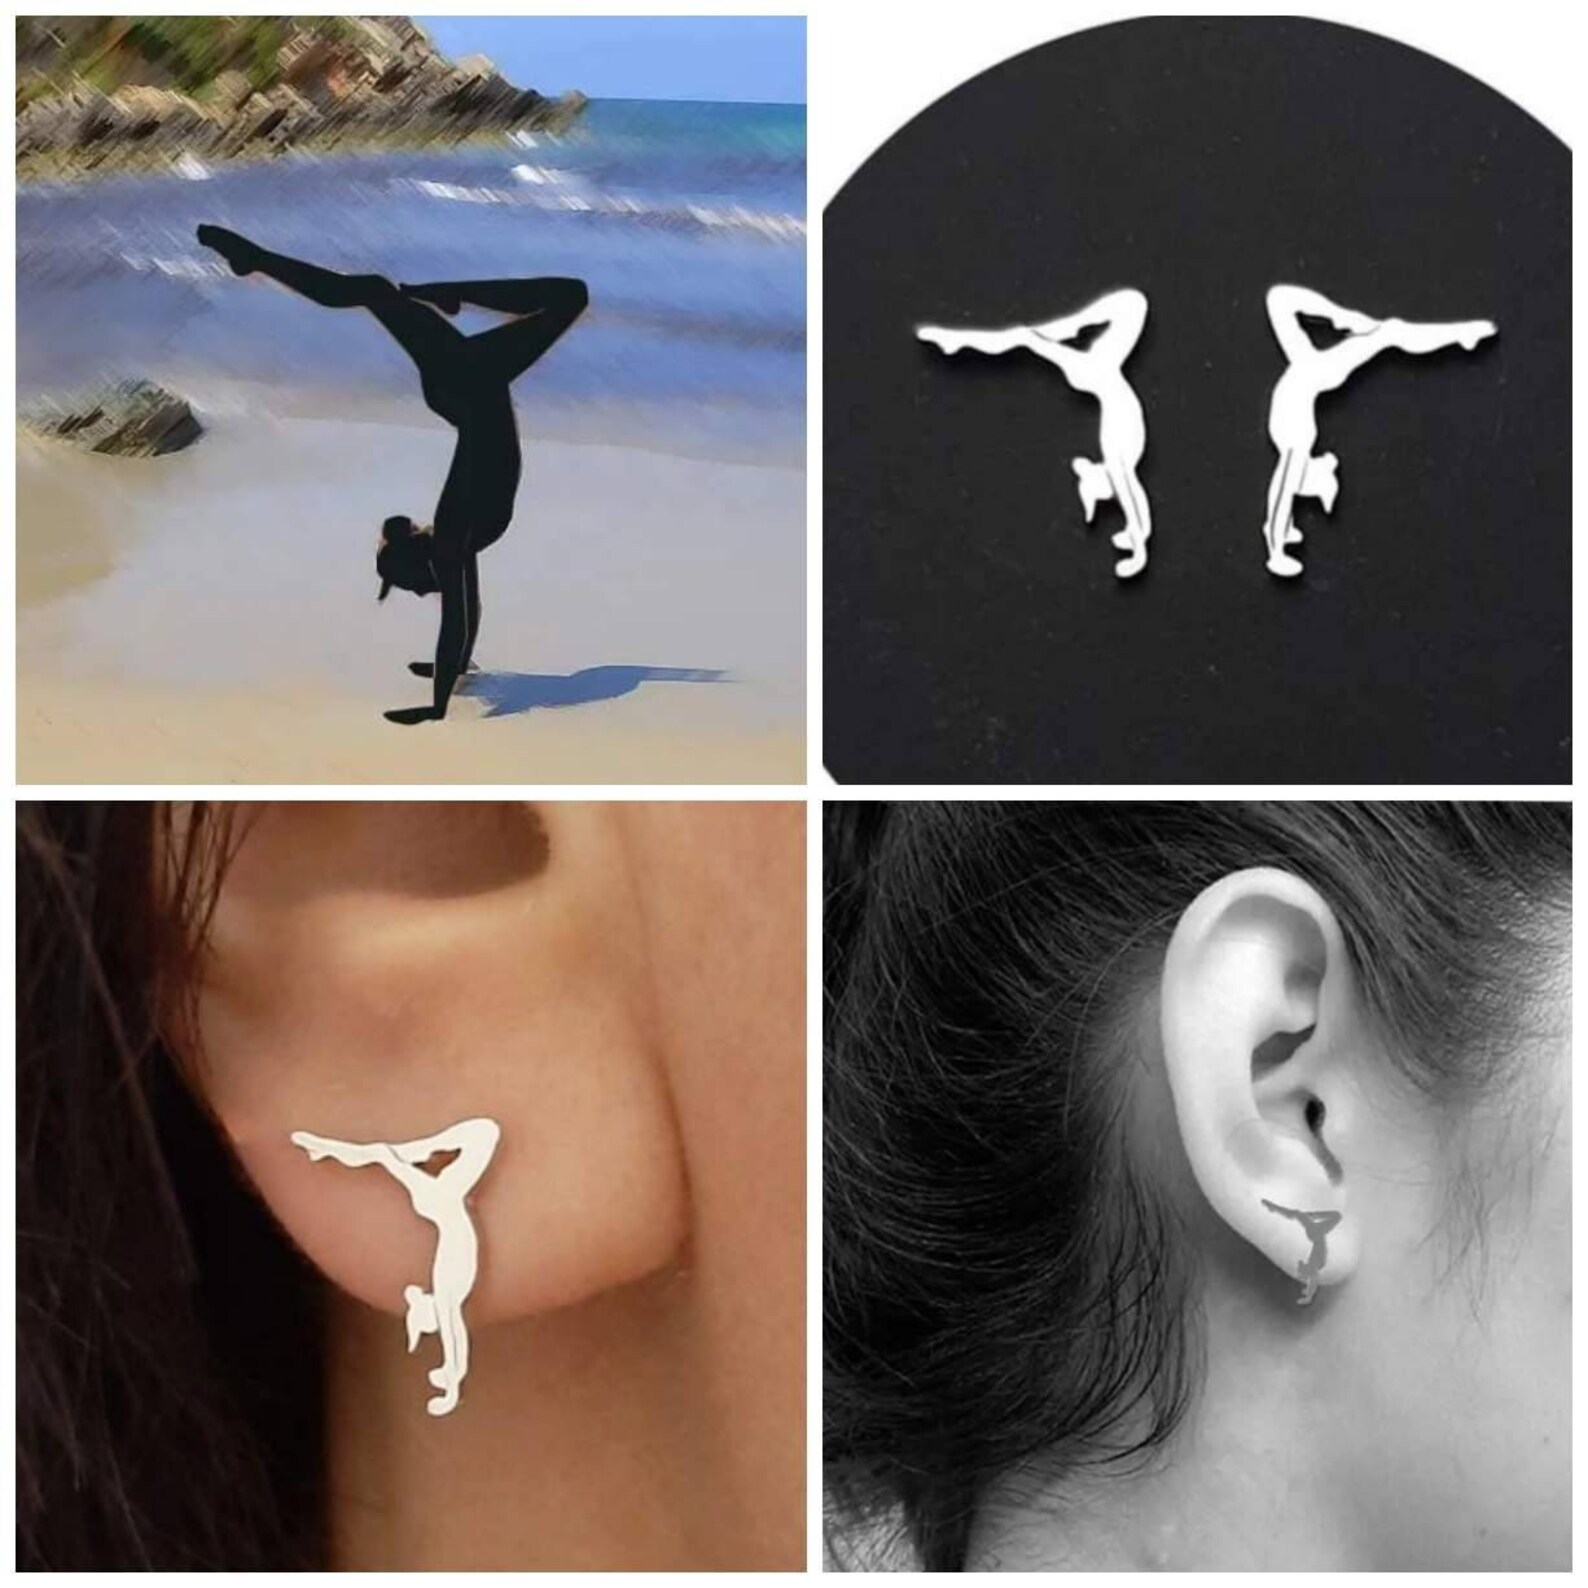 Personalized rhythmic gymnastic earrings